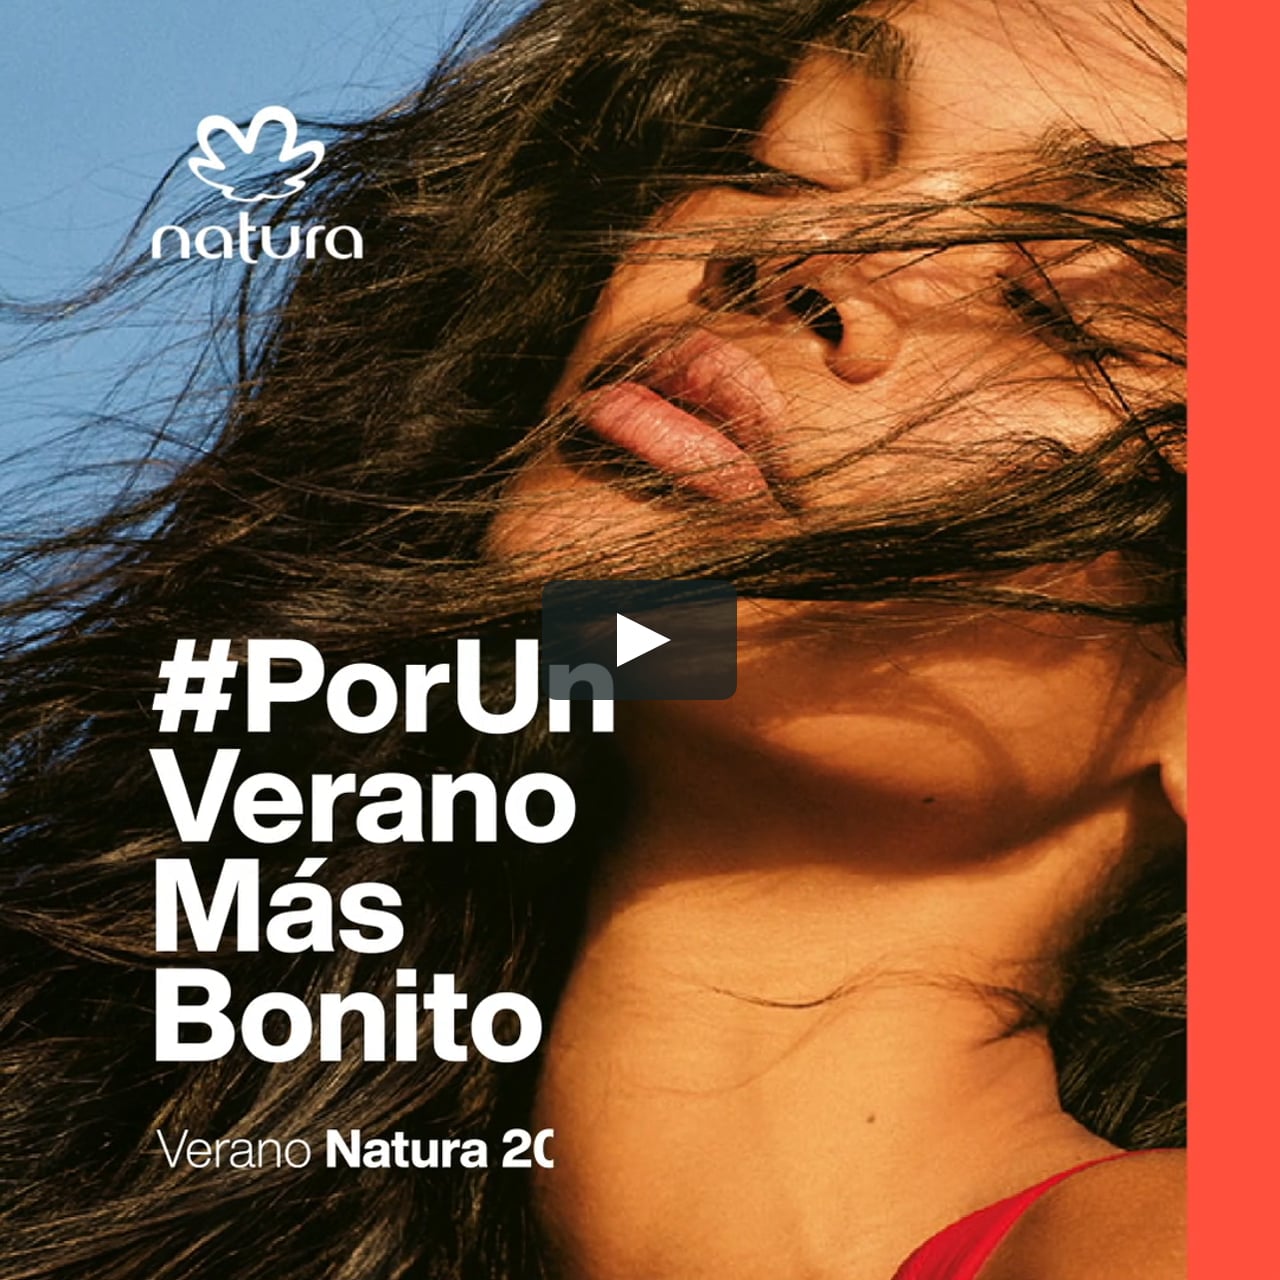 Natura Campaña Verano 2020 on Vimeo